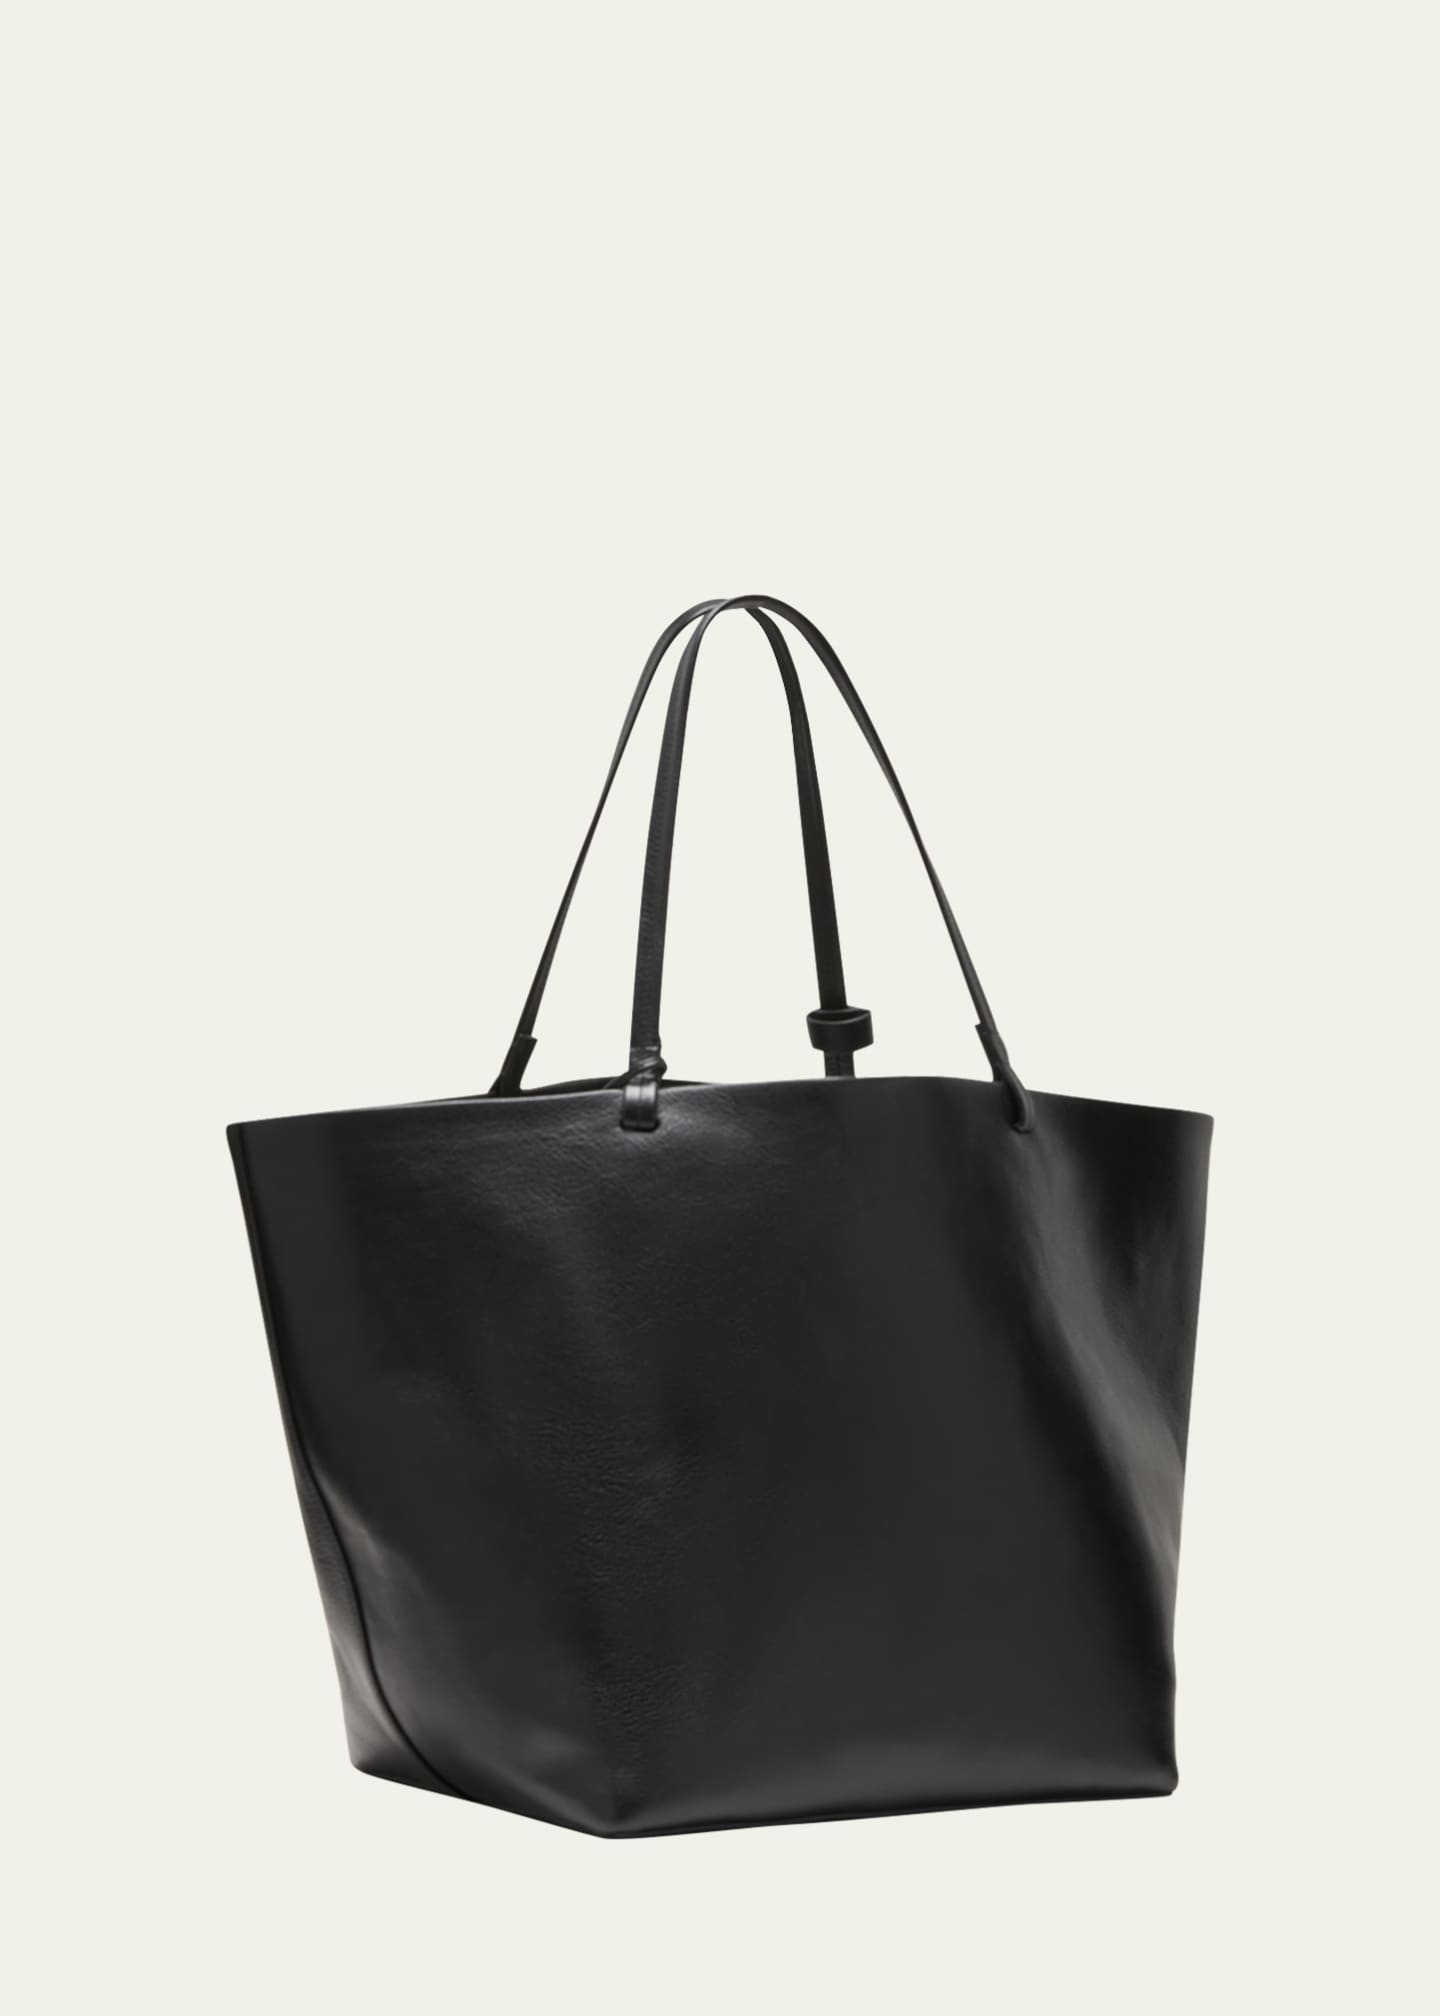 Leather shopper bag - Women